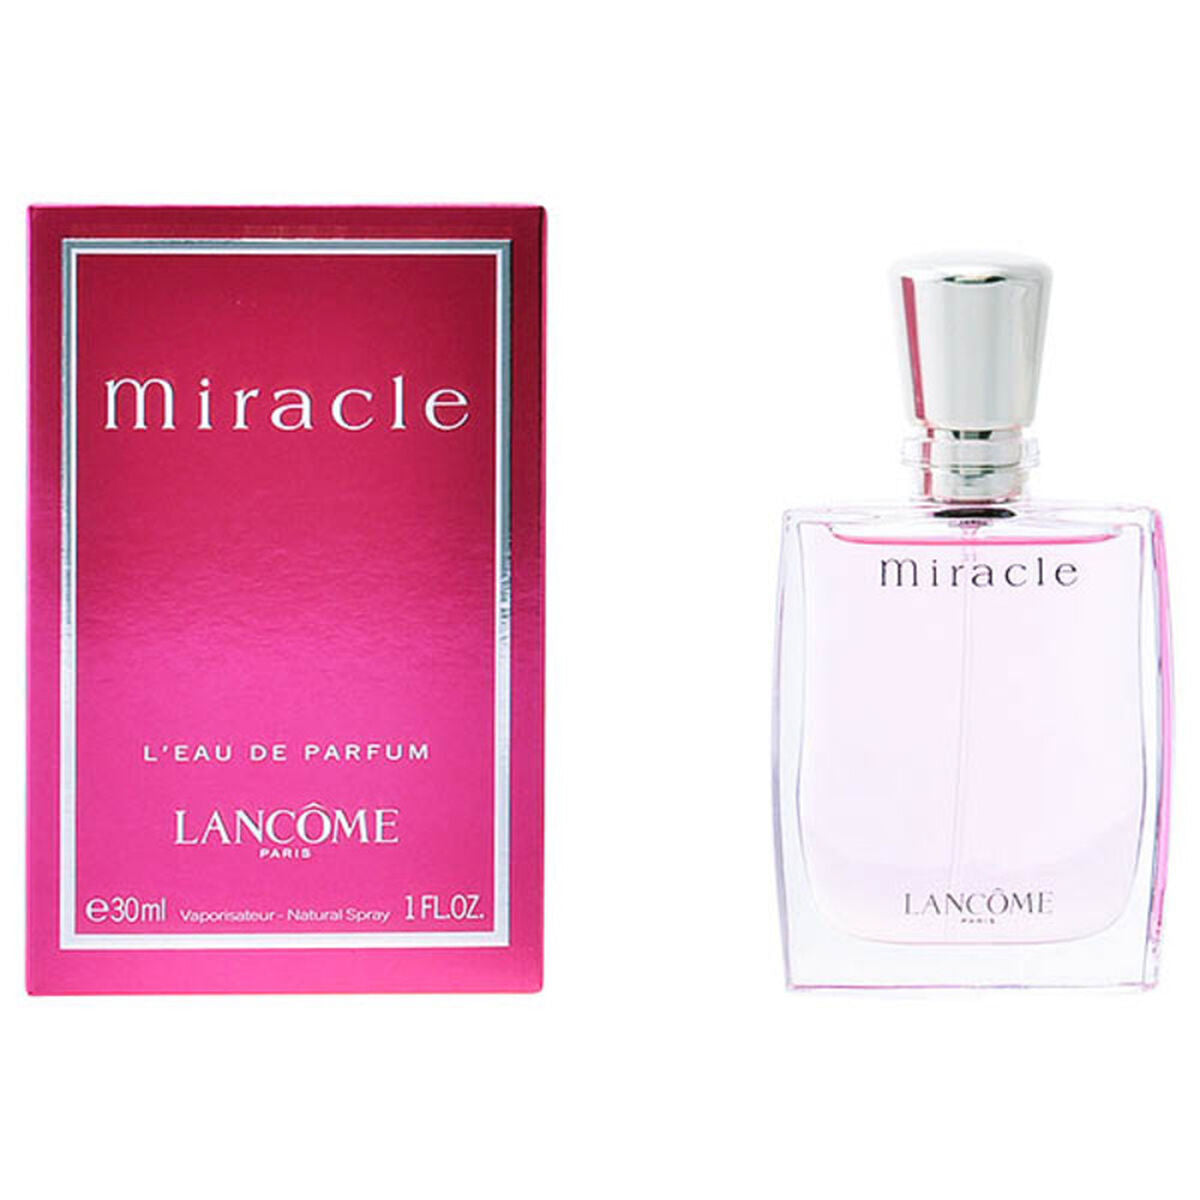 Kaufe Damenparfum Miracle Lancôme EDP limited edition bei AWK Flagship um € 68.00